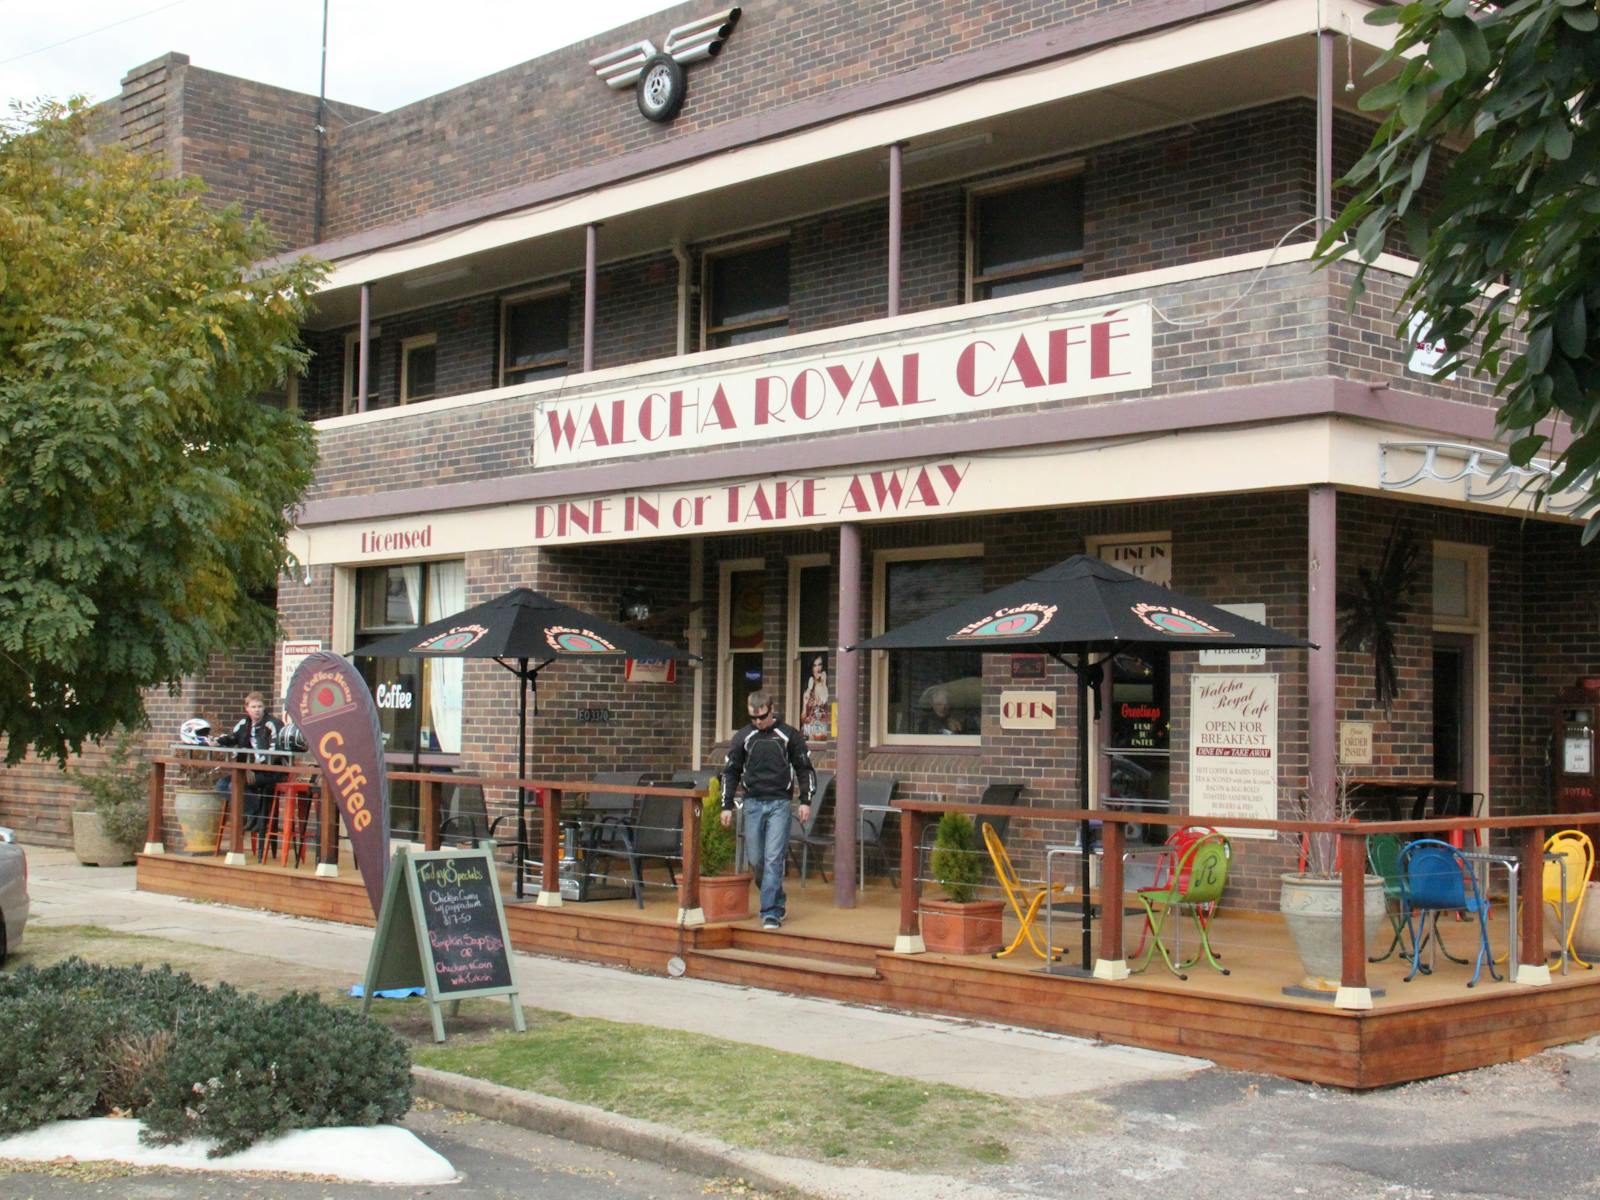 Walcha Royal Cafe and Boutique Accommodation